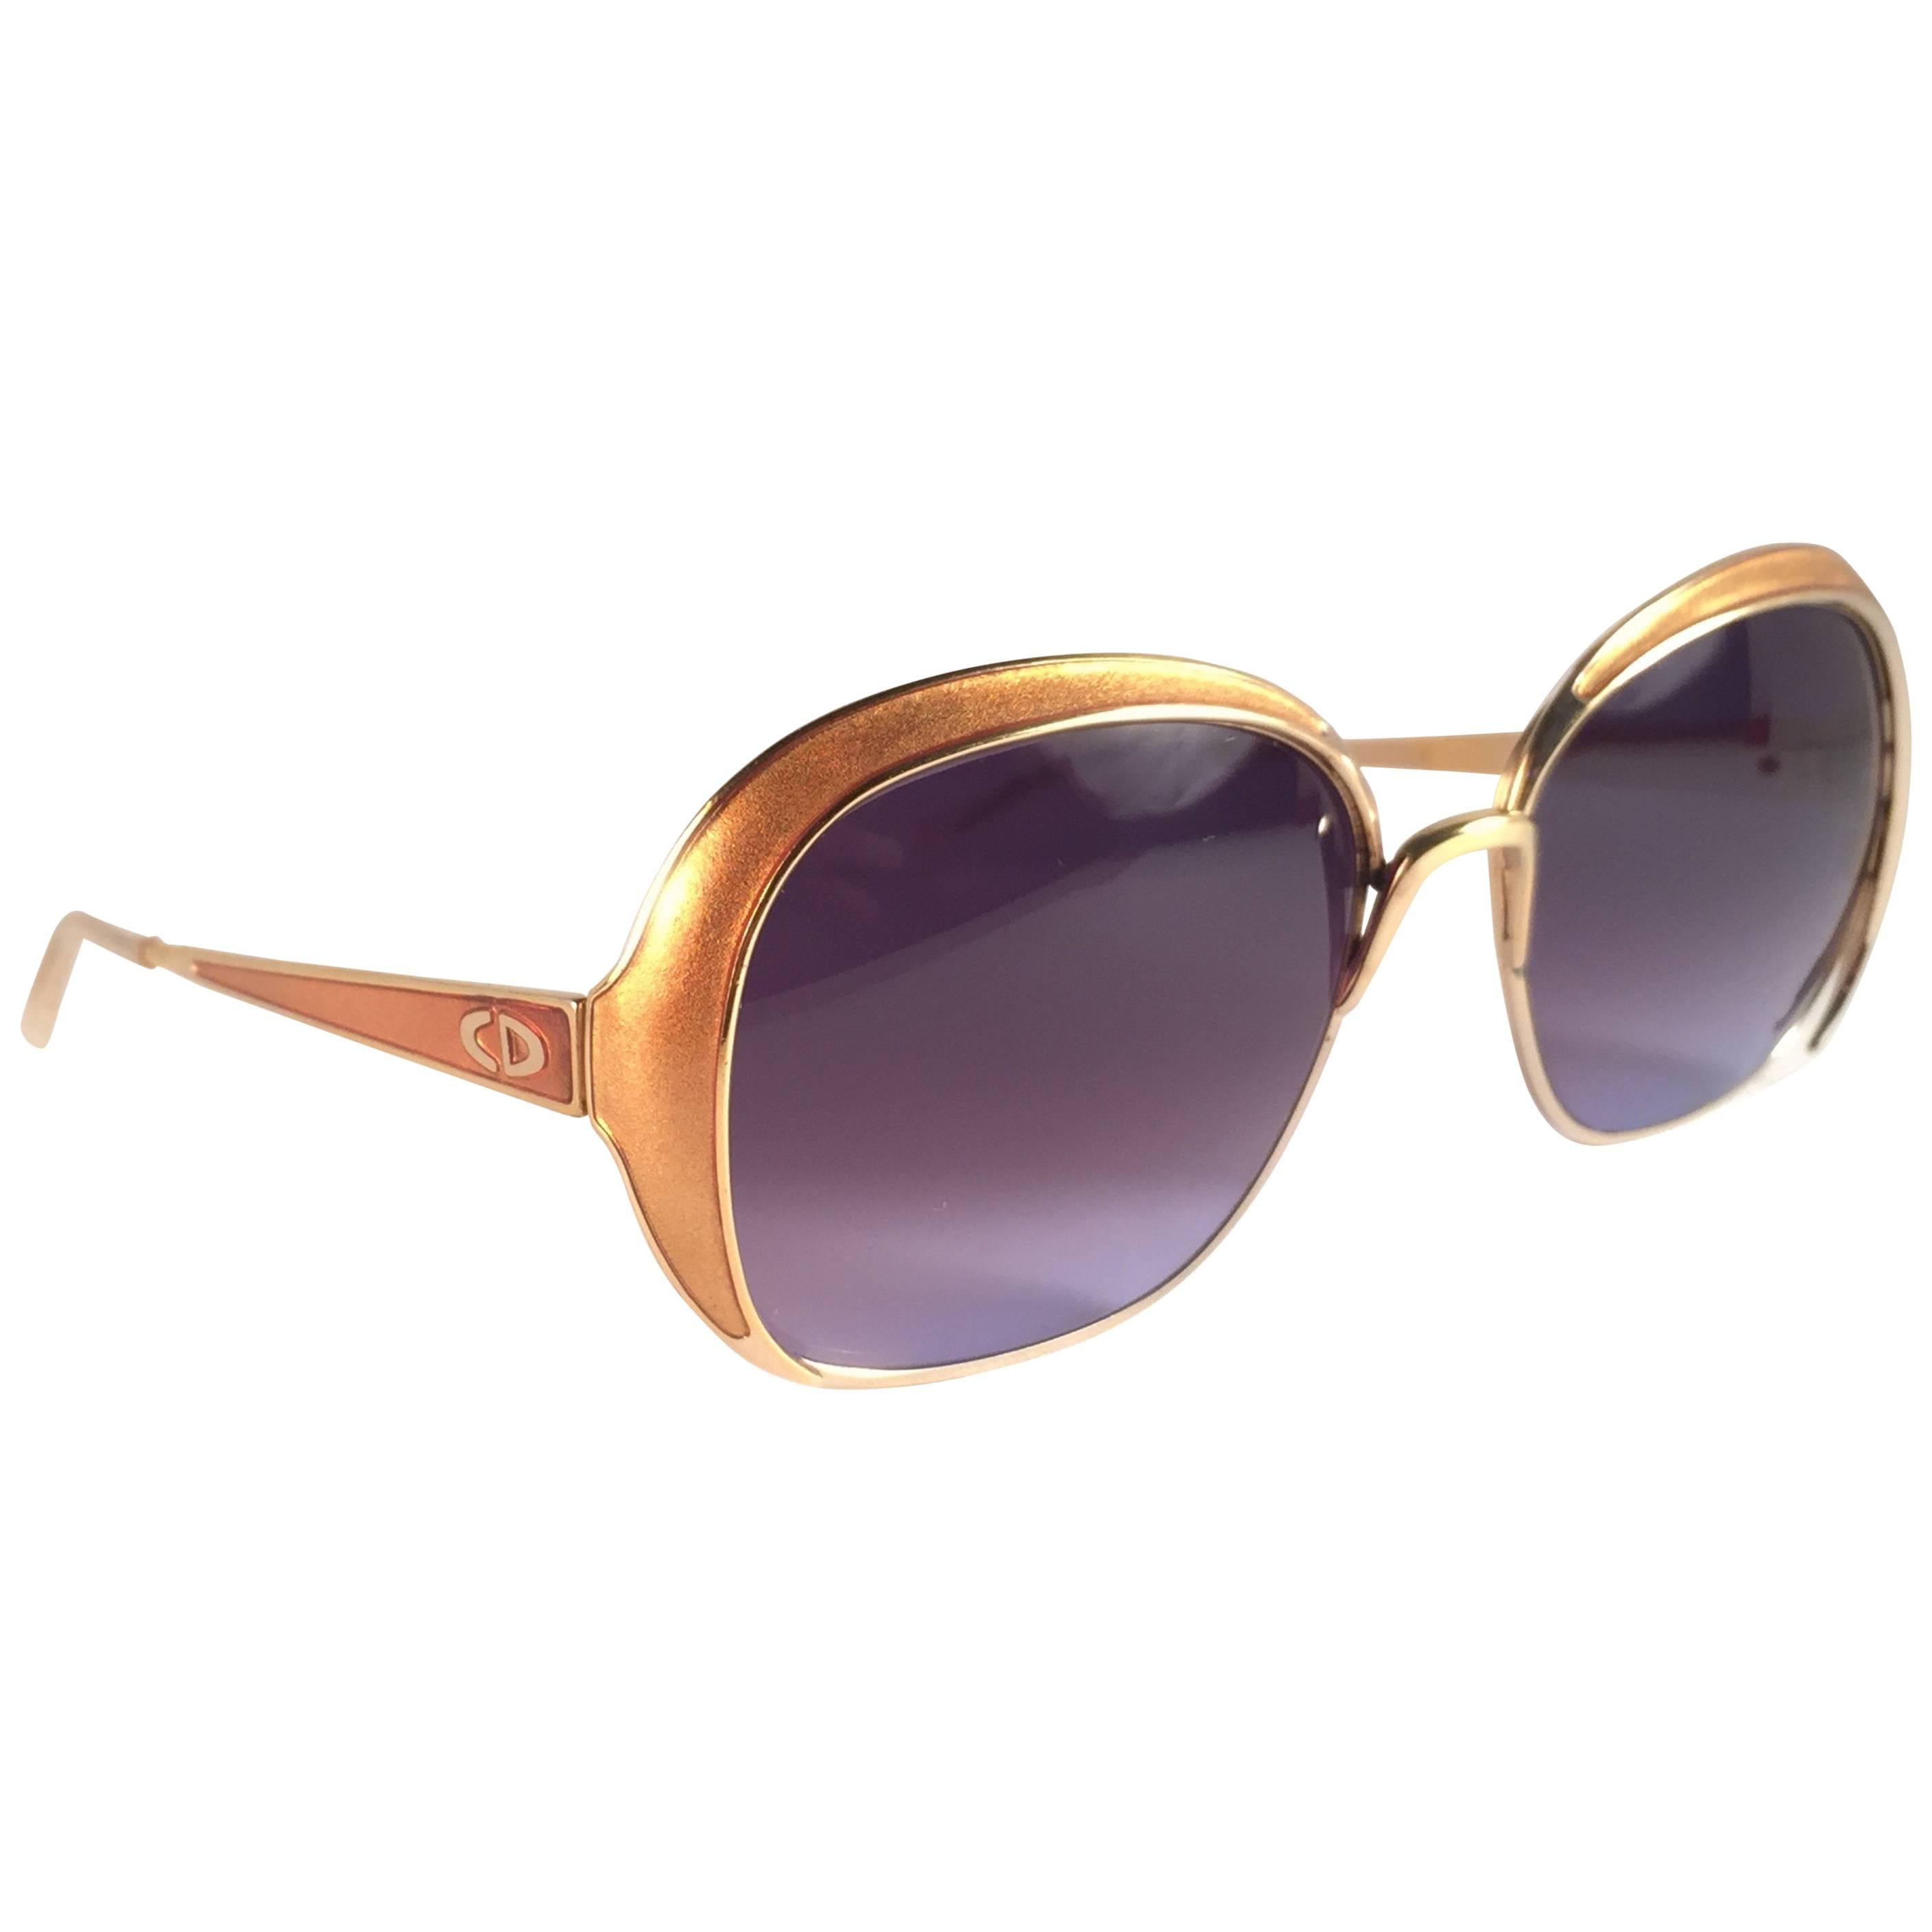 New Vintage Christian Dior 2132 44 Gold & Black Sunglasses Austria